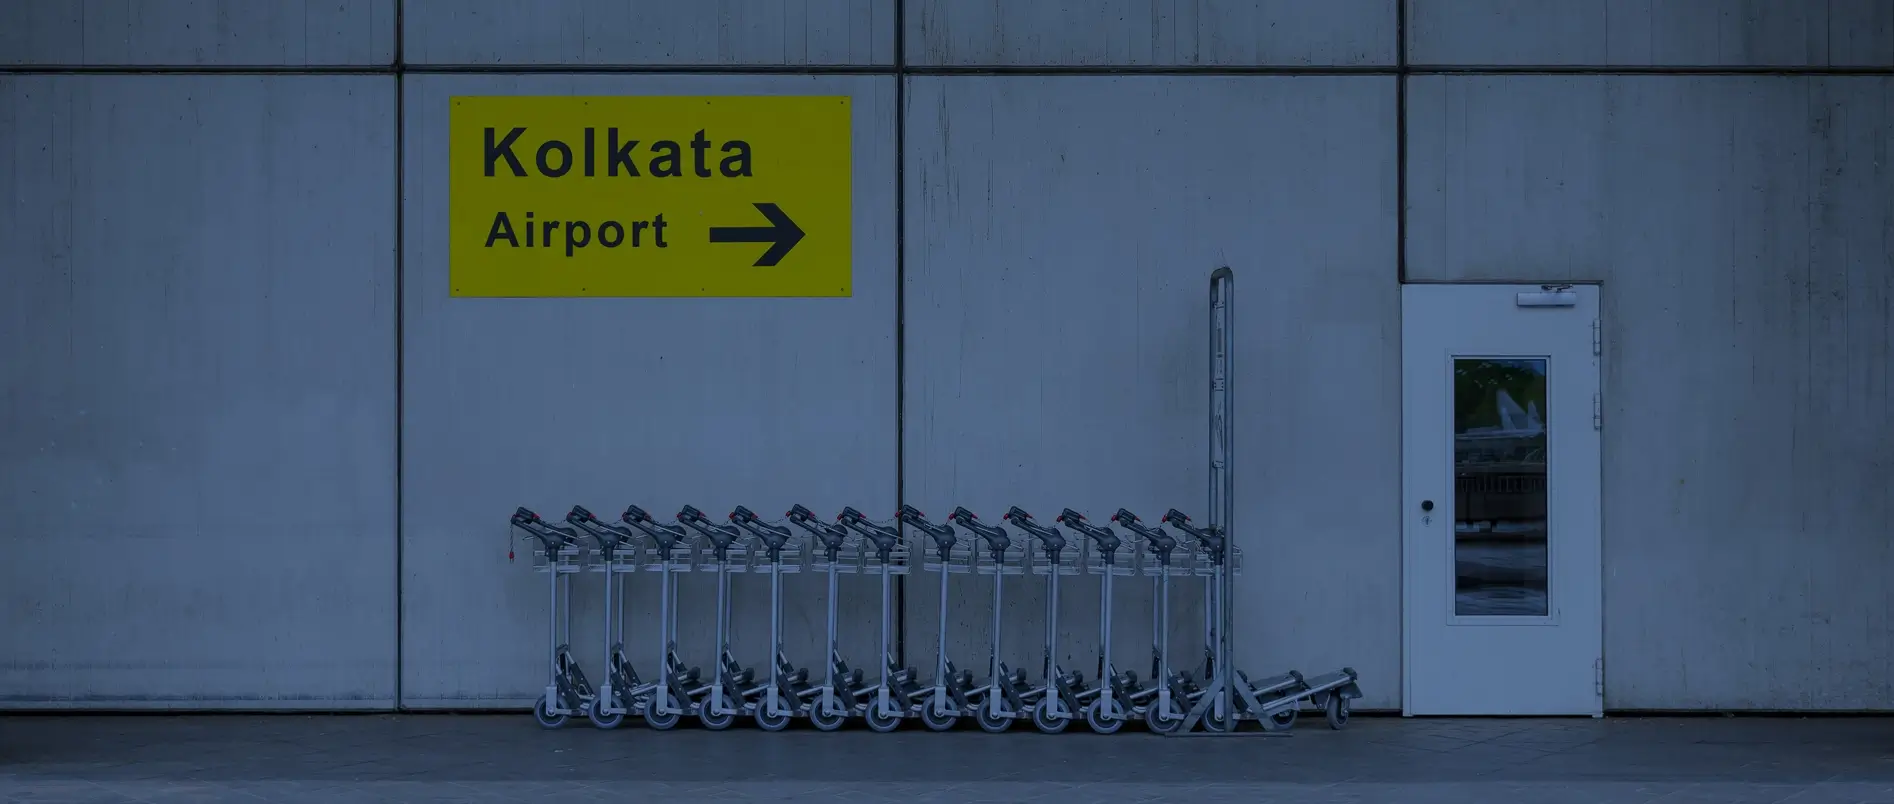 <span style="color:#EFE625">Kolkata </span>Airport Trolleys